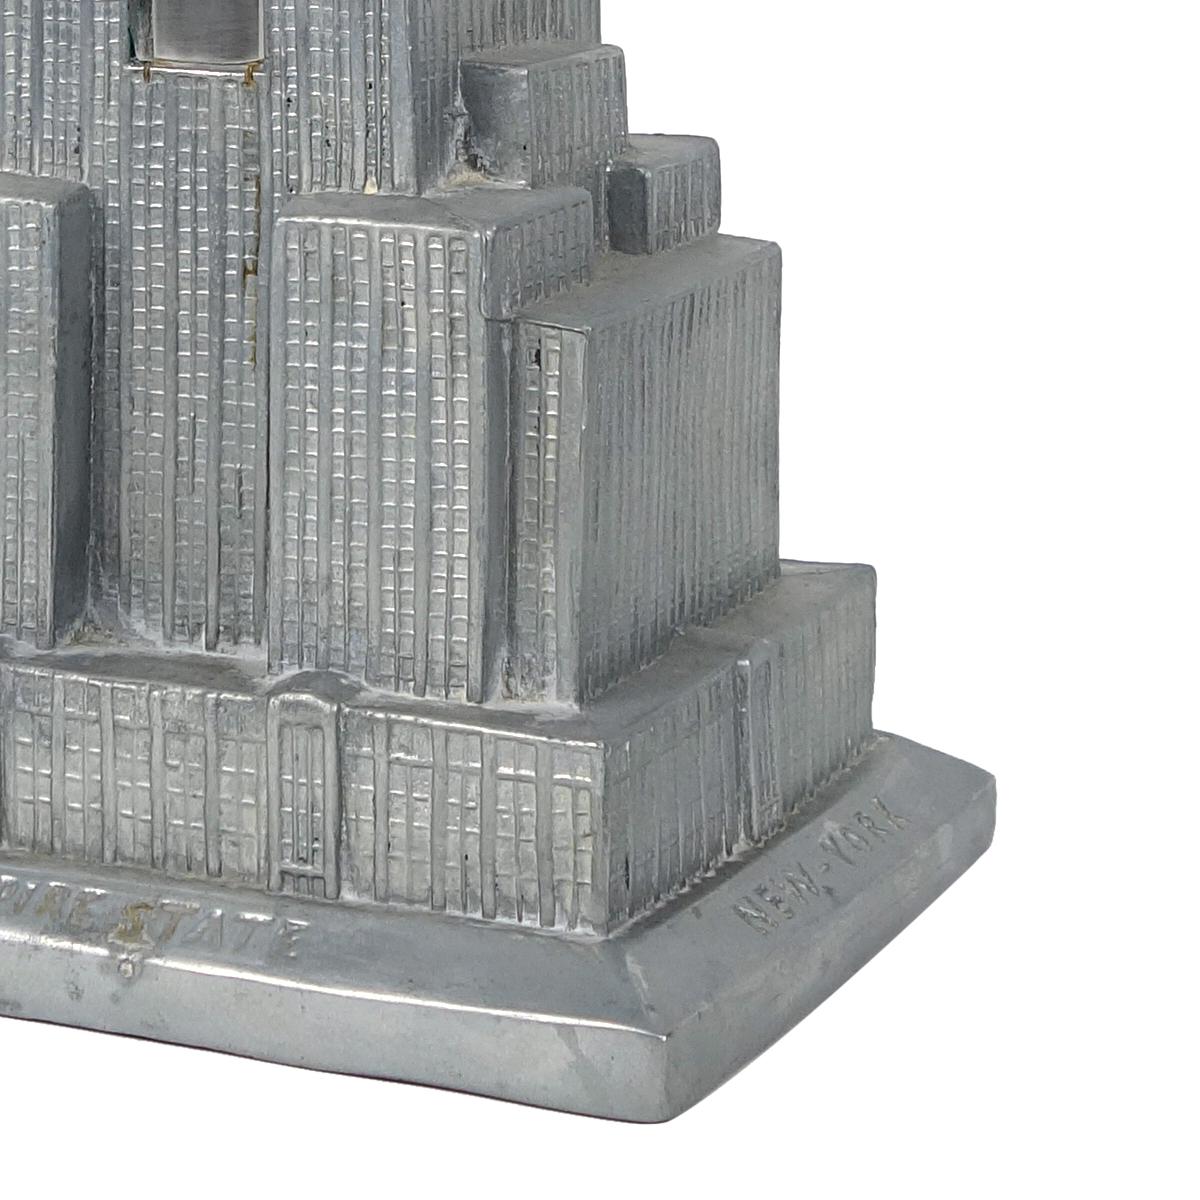 Table Lamp by Sarsaparilla Deco Designs Model of Empire State Building For Sale 4